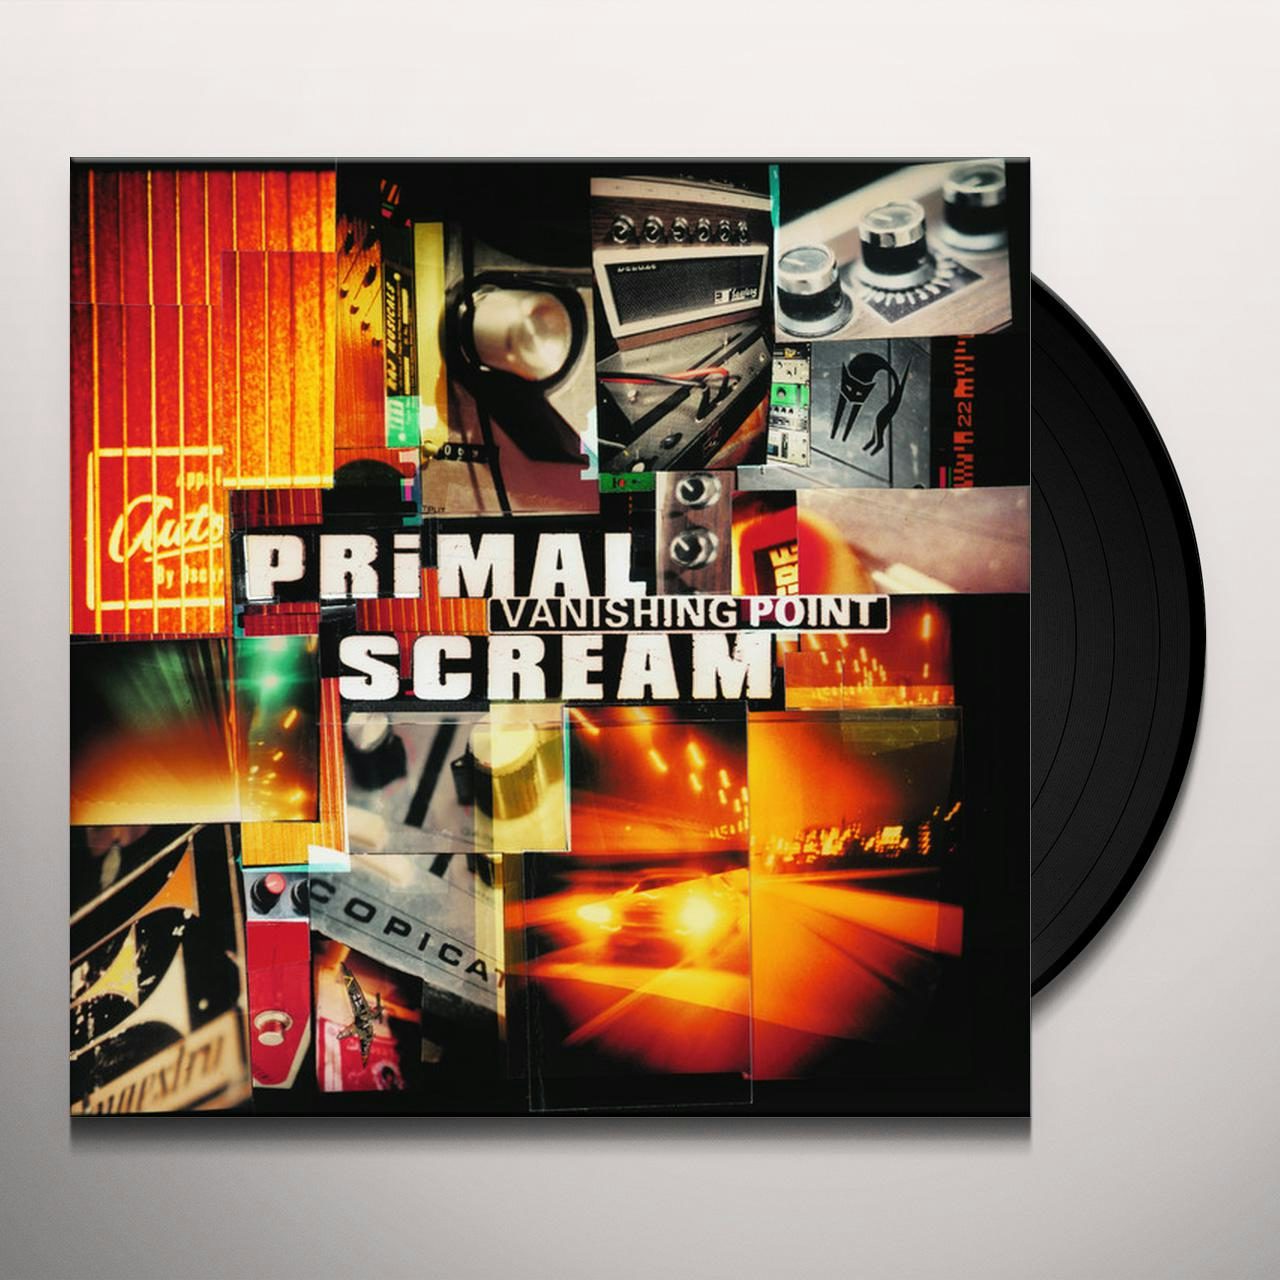 Primal Scream VANISHING POINT Vinyl Record